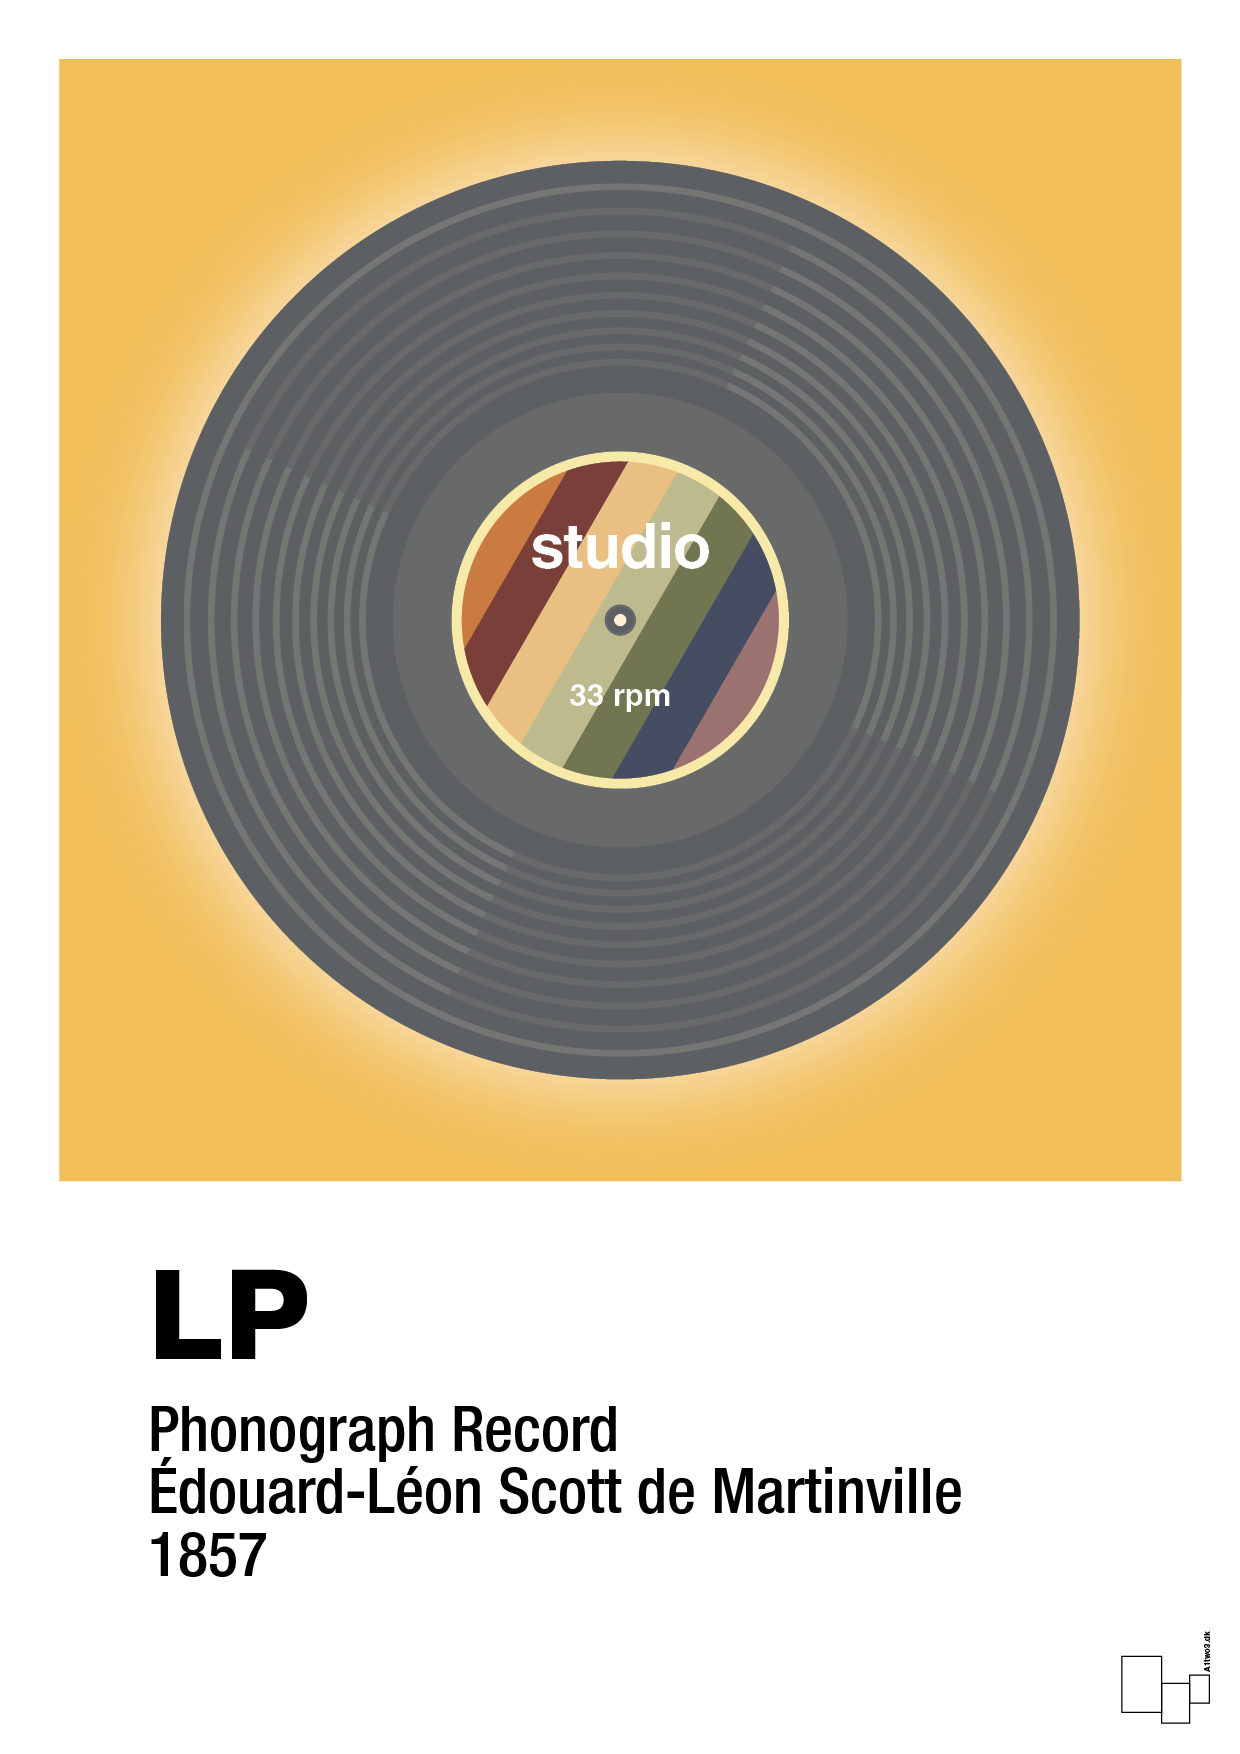 vinylplade 33rpm - Plakat med Grafik i Honeycomb